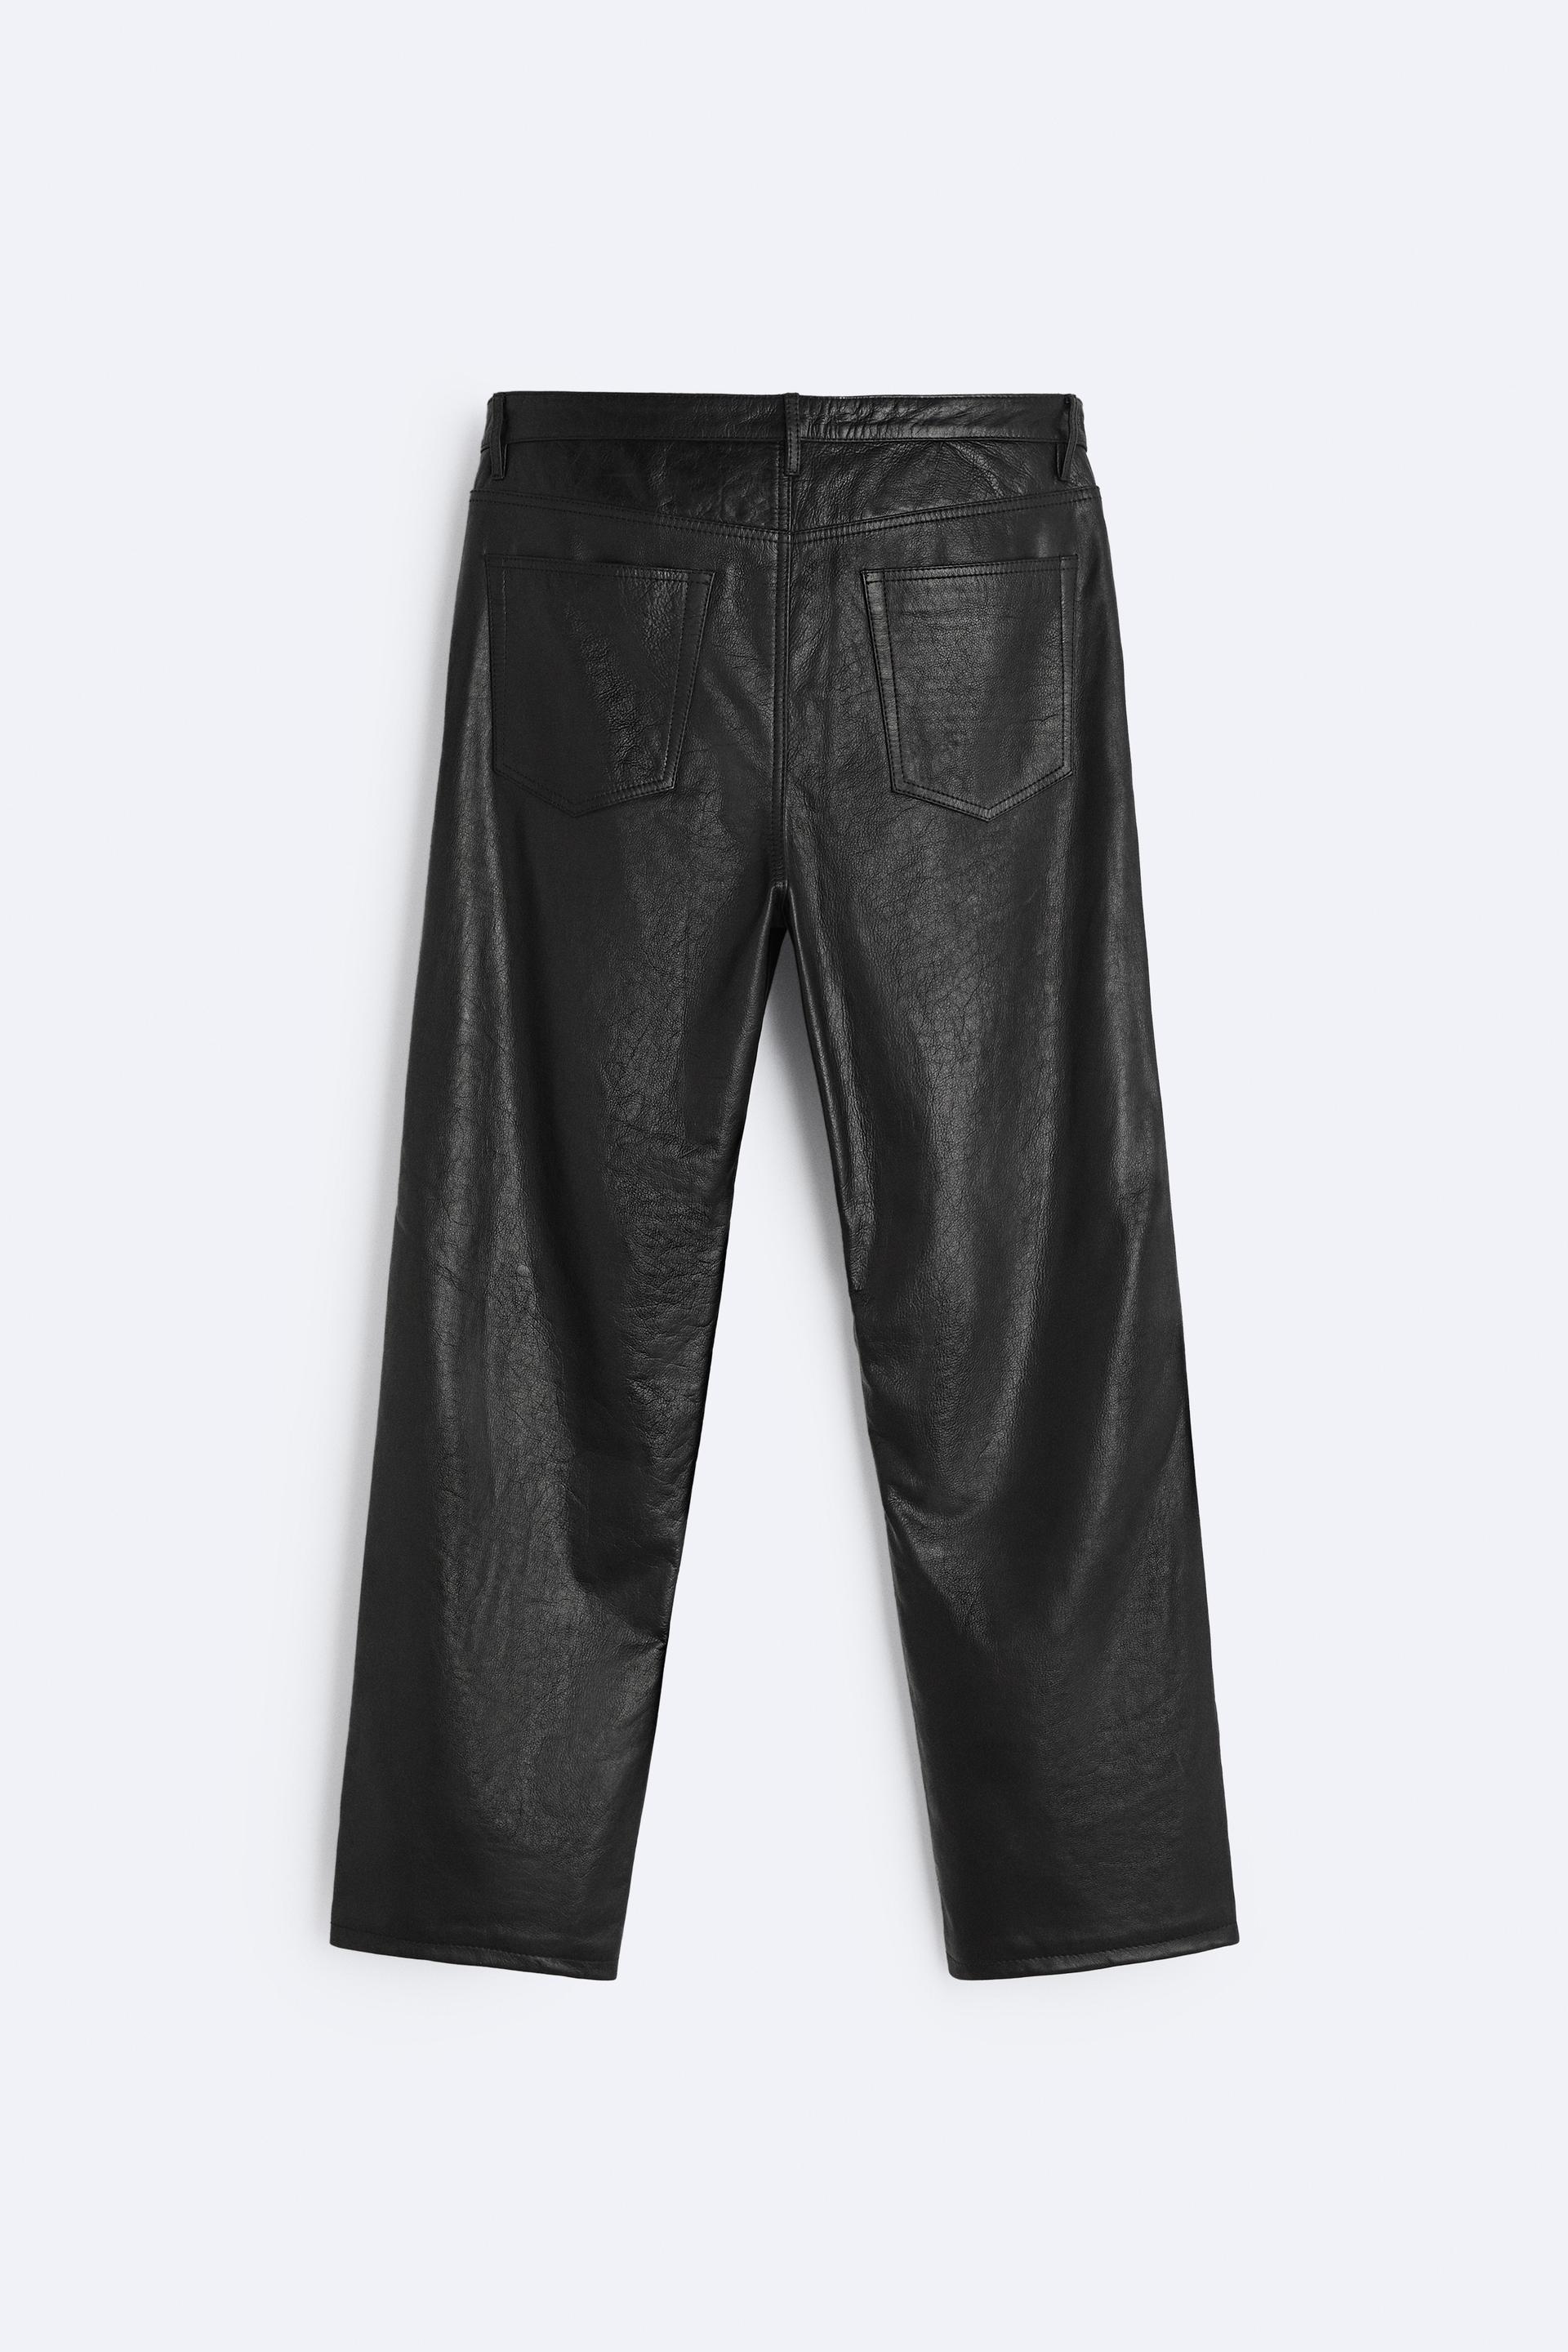 ZARA Slim Leather Pants for Women